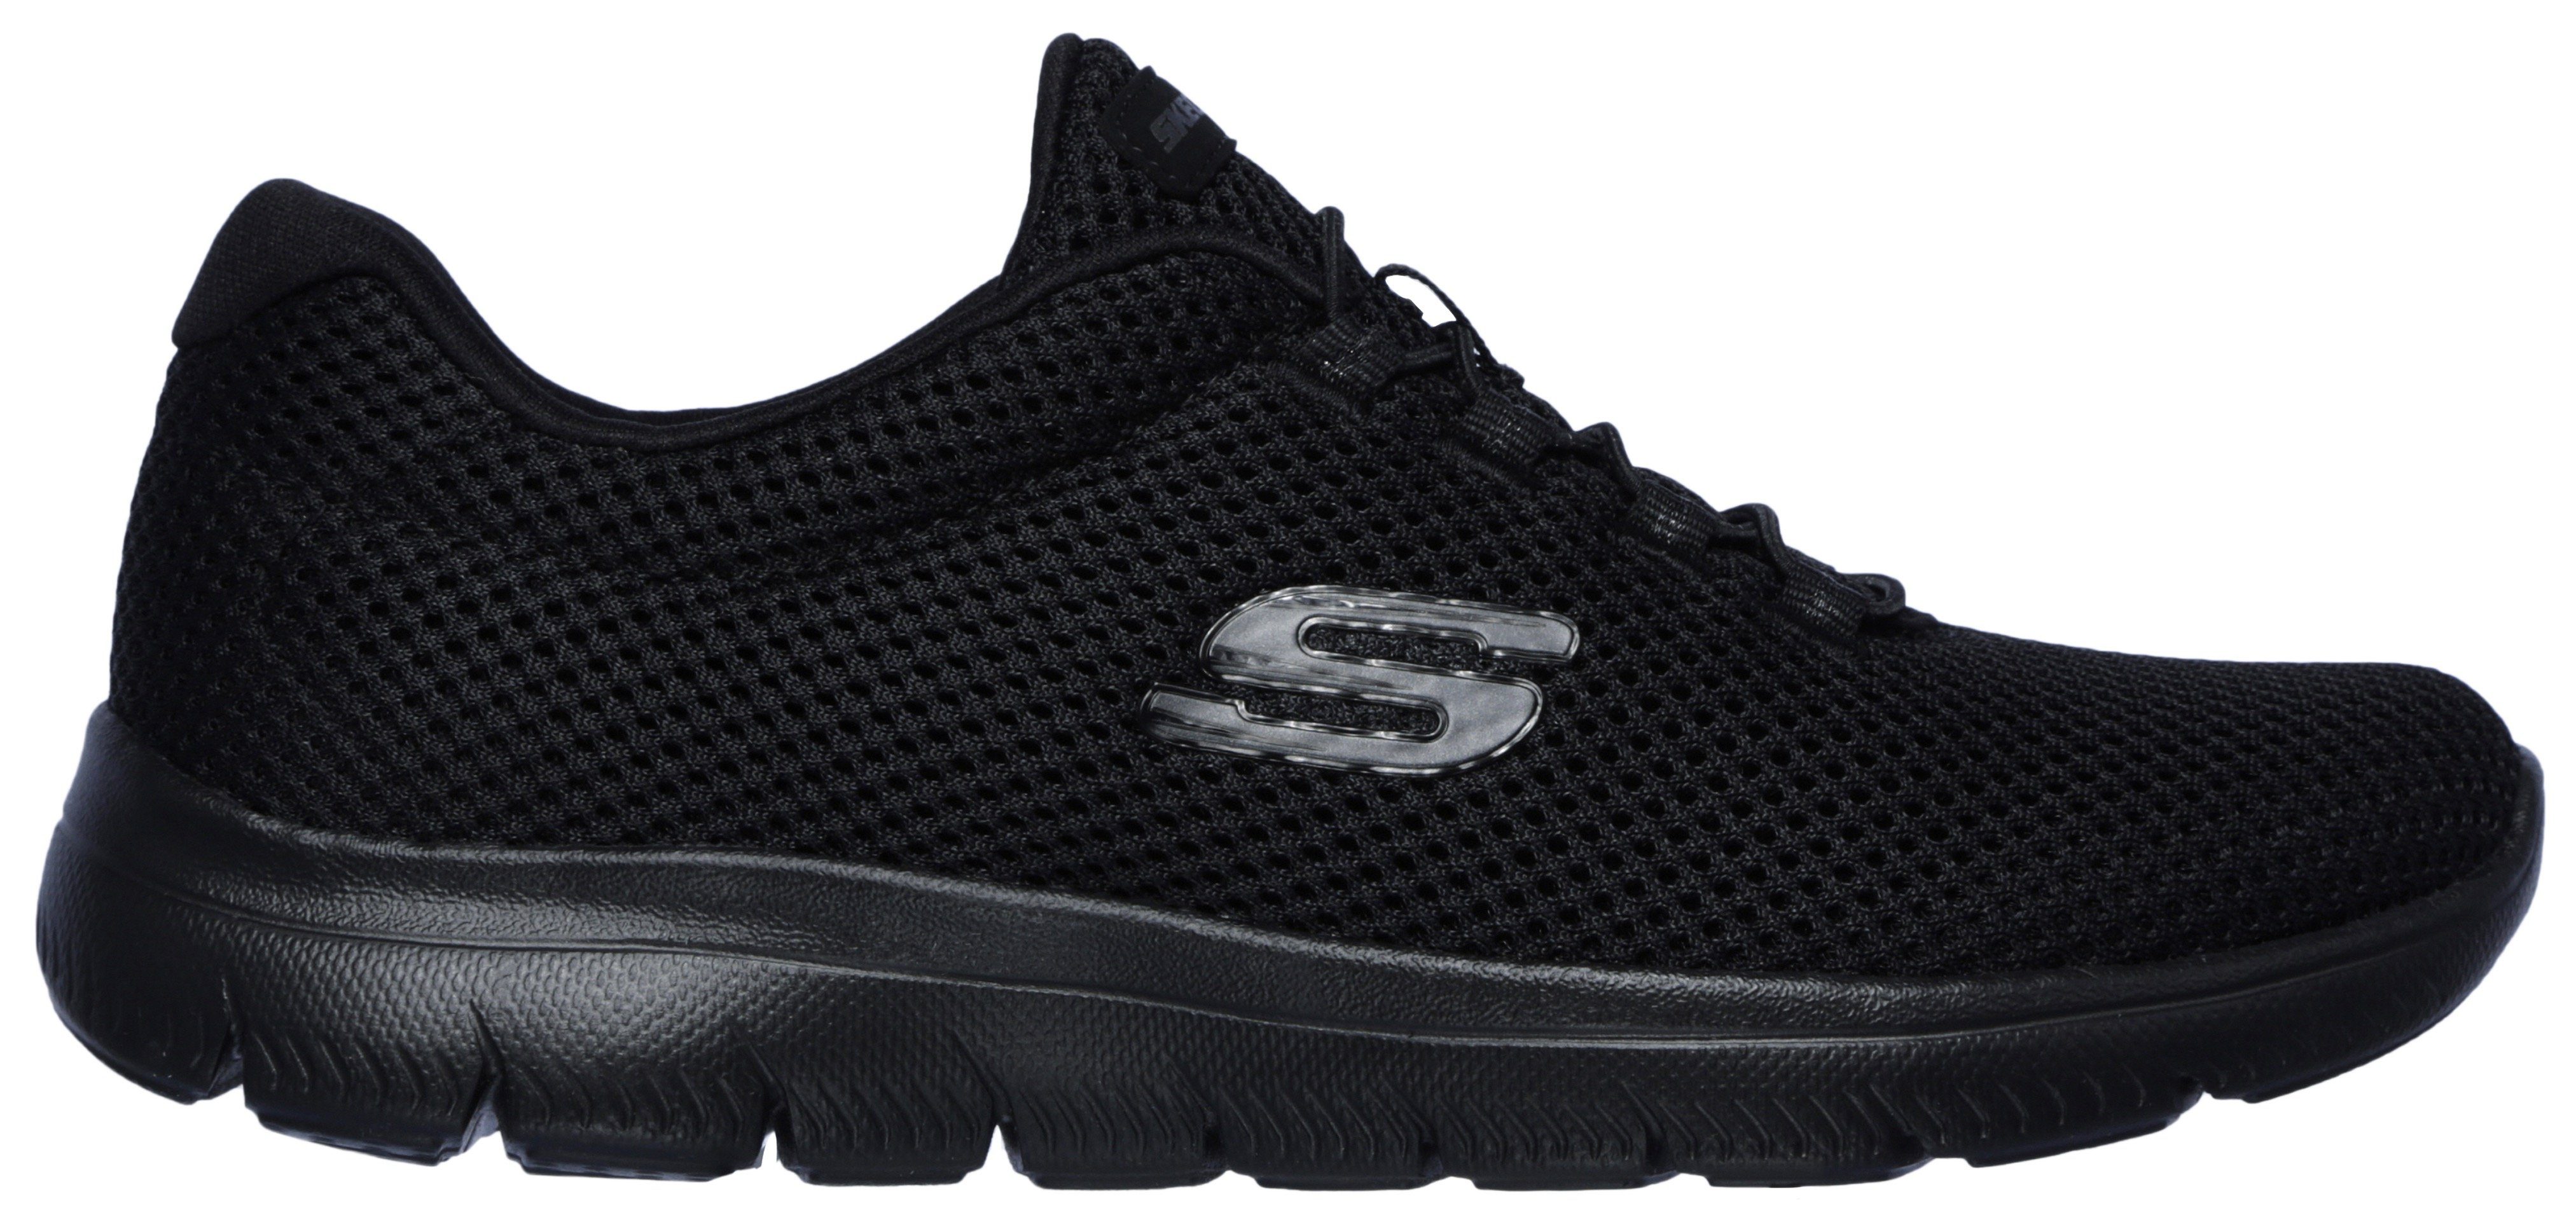 Skechers SUMMITS Innensohle mit Slip-On komfortabler schwarz Sneaker